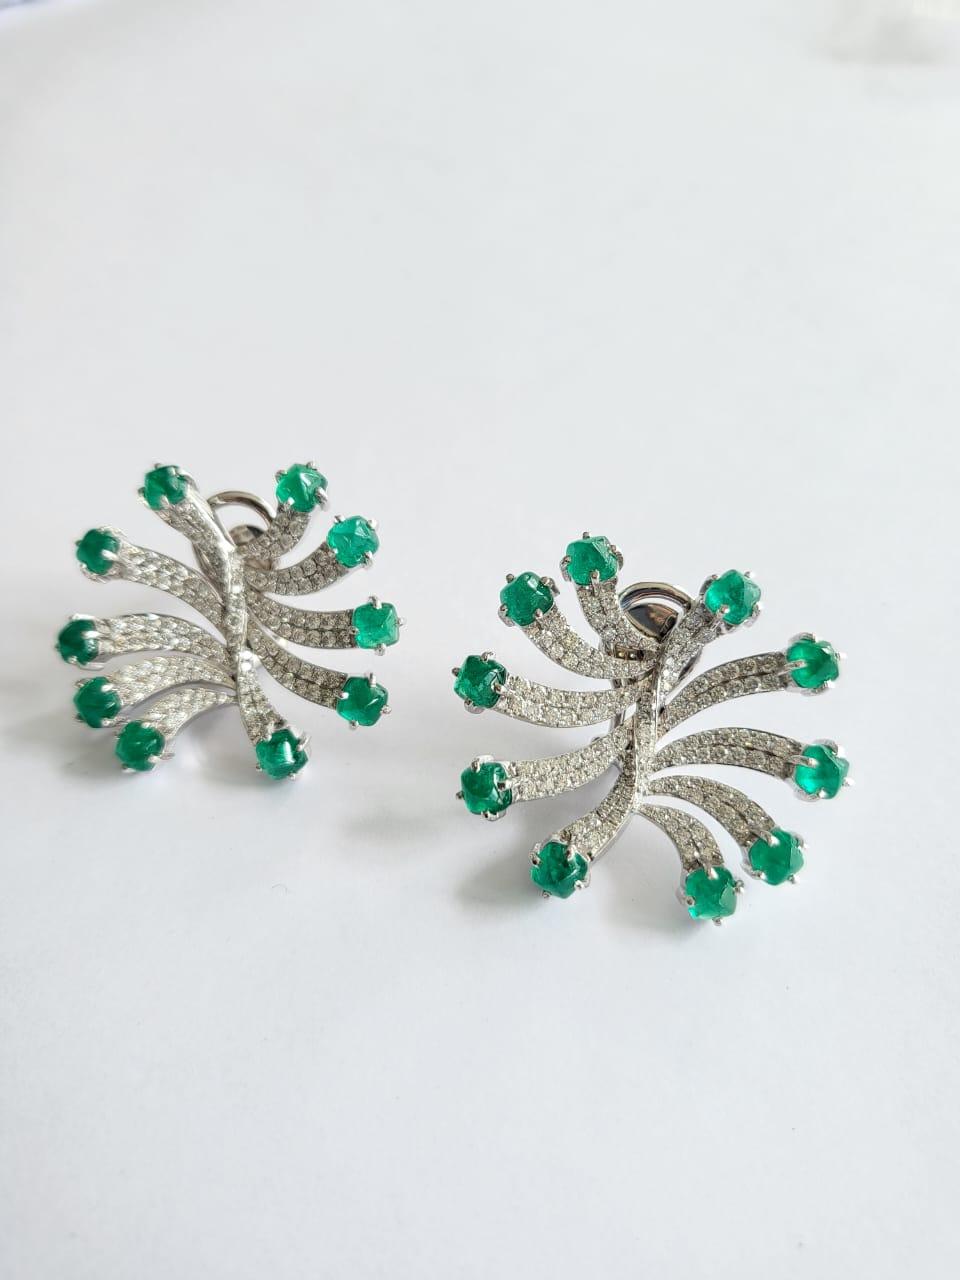 Women's or Men's 7.11 Carats, Natural Columbian Sugarloaf Emerald & Diamonds Stud Earrings